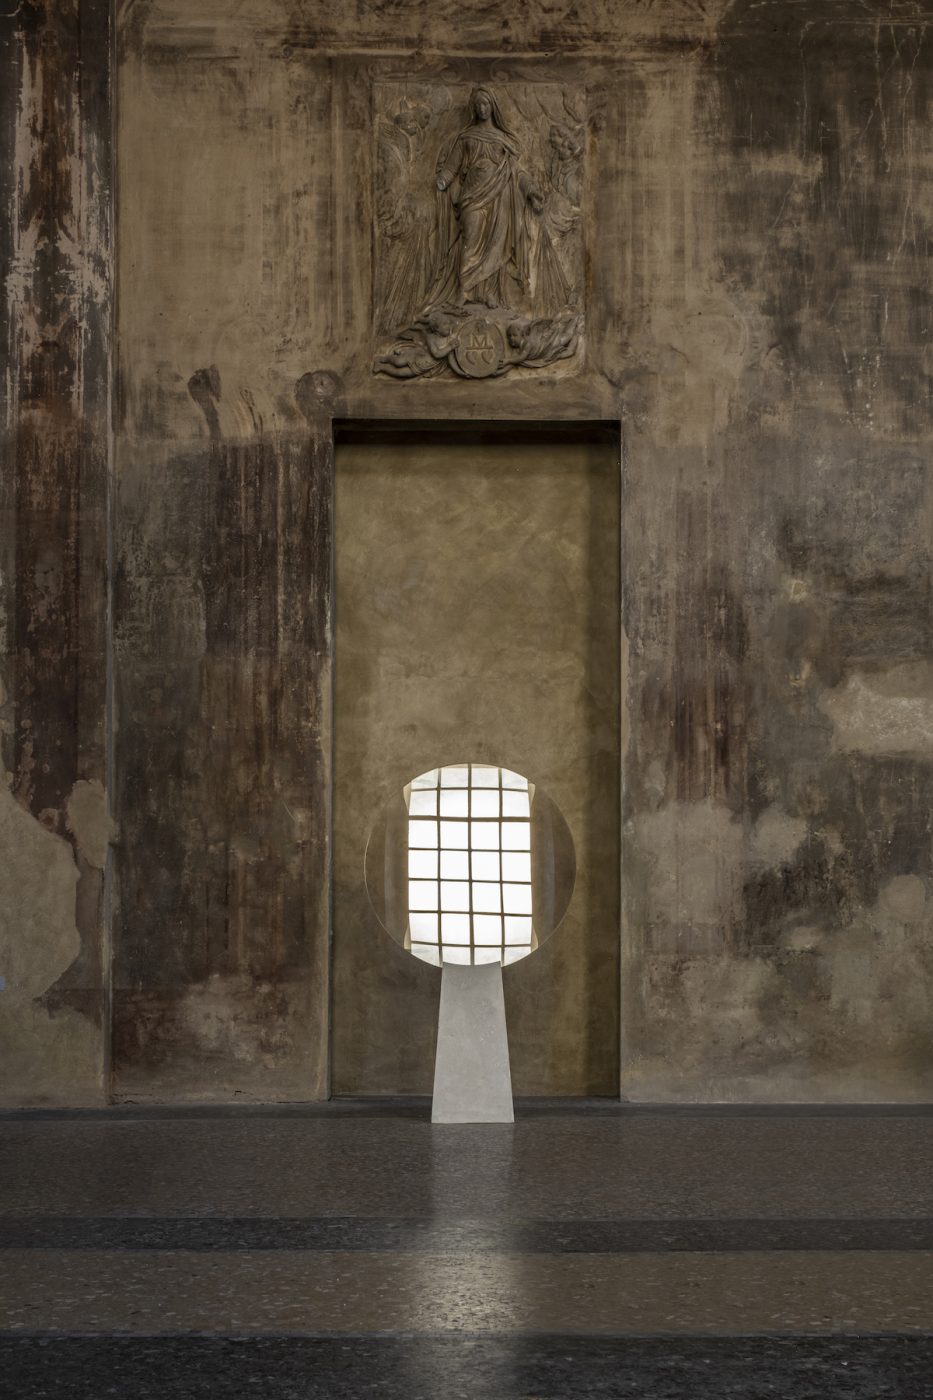 Boldizar Senteski’s Void floor mirror at Galerie Philia's "Desacralized" exhibition in Milan